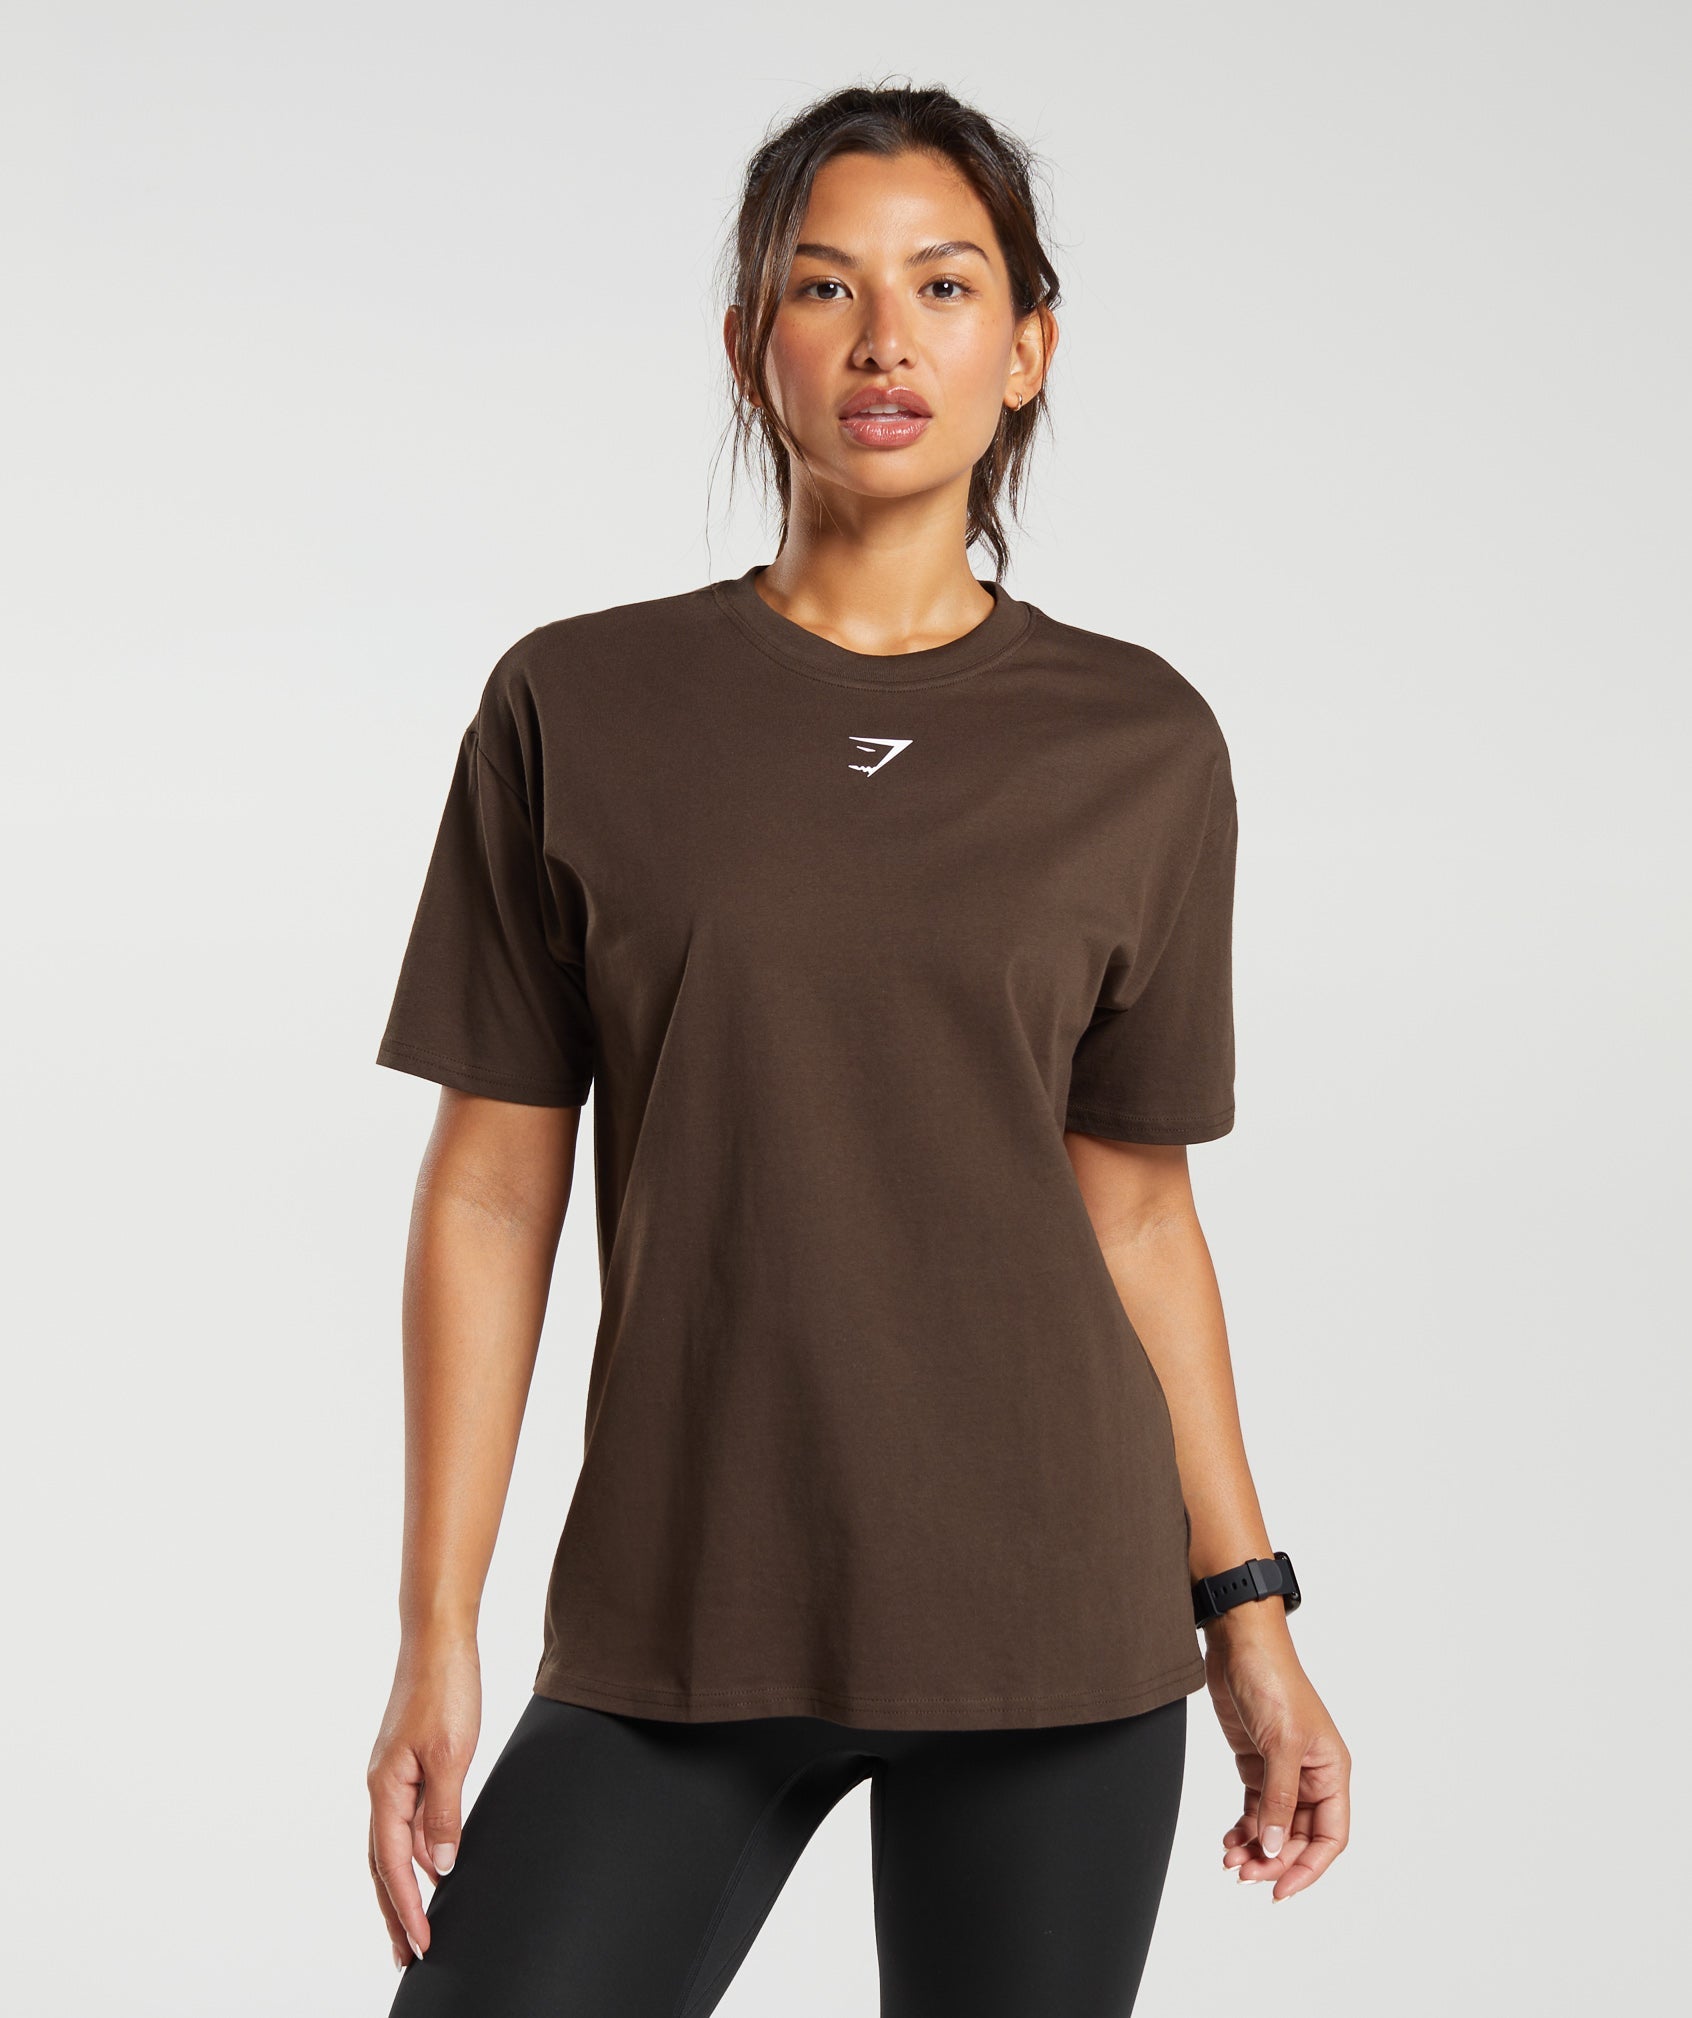 Gymshark Fraction Oversized T-Shirt - Archive Brown